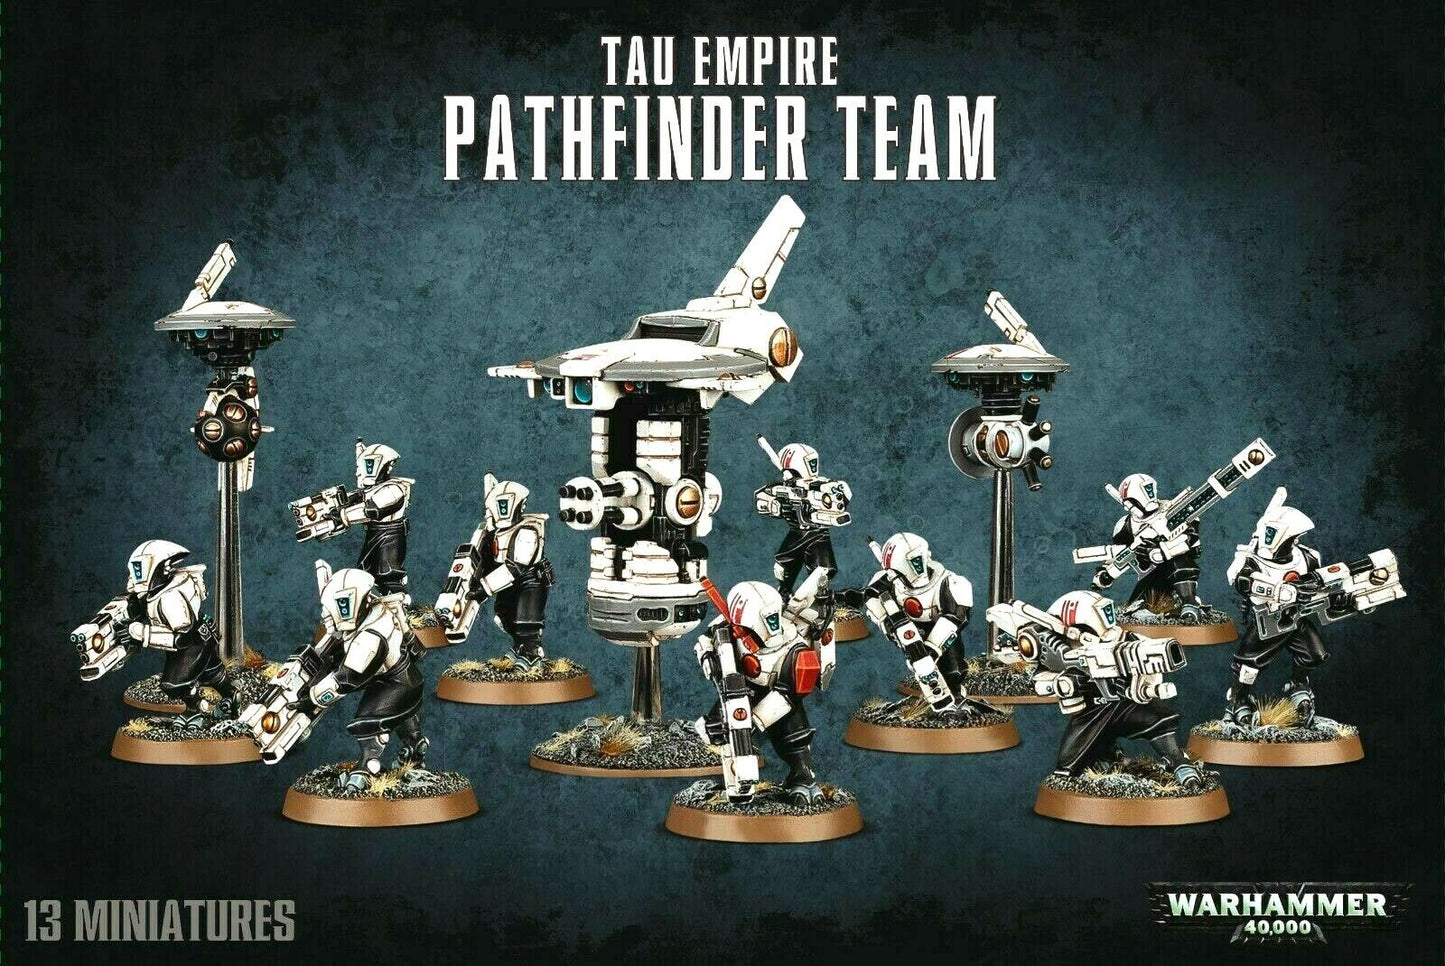 Pathfinder Team Tau Empire Warhammer 40K NIB!                            WBGames